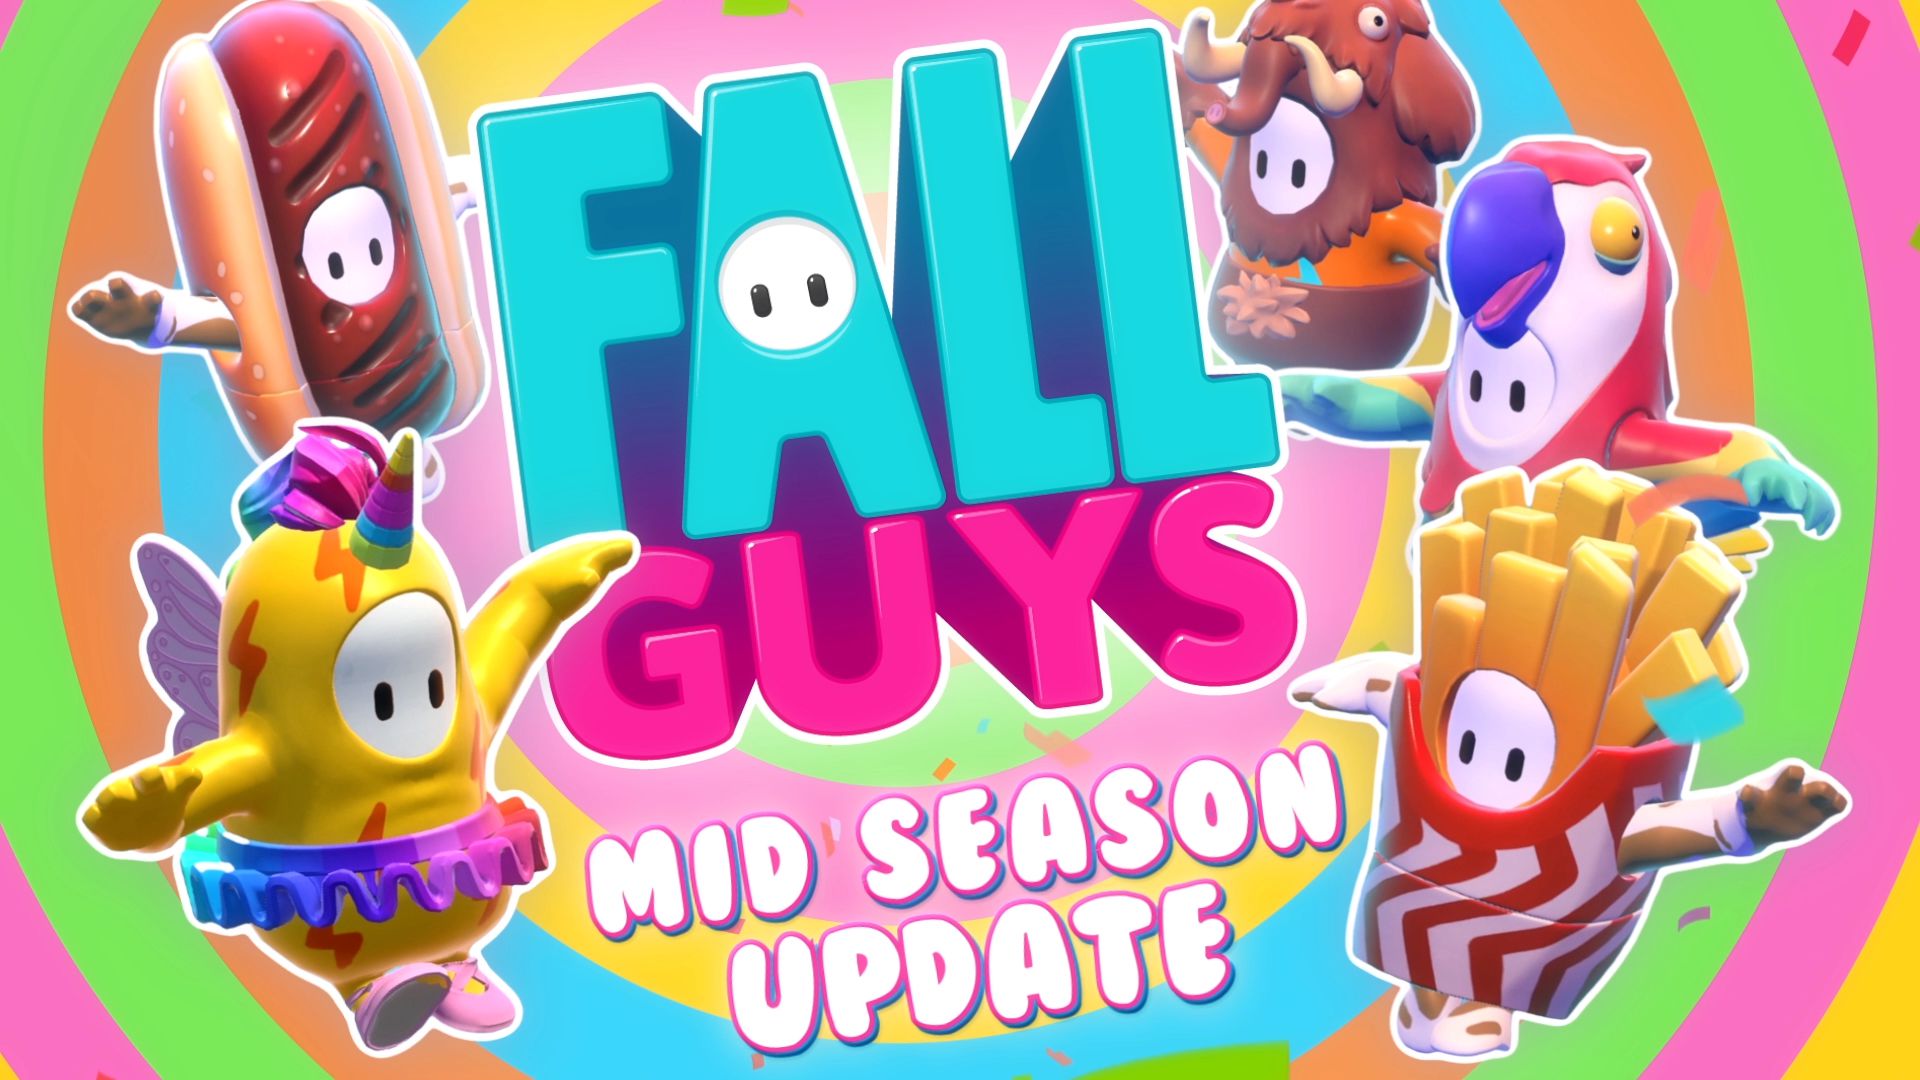 Fall Guys Mid Season Update